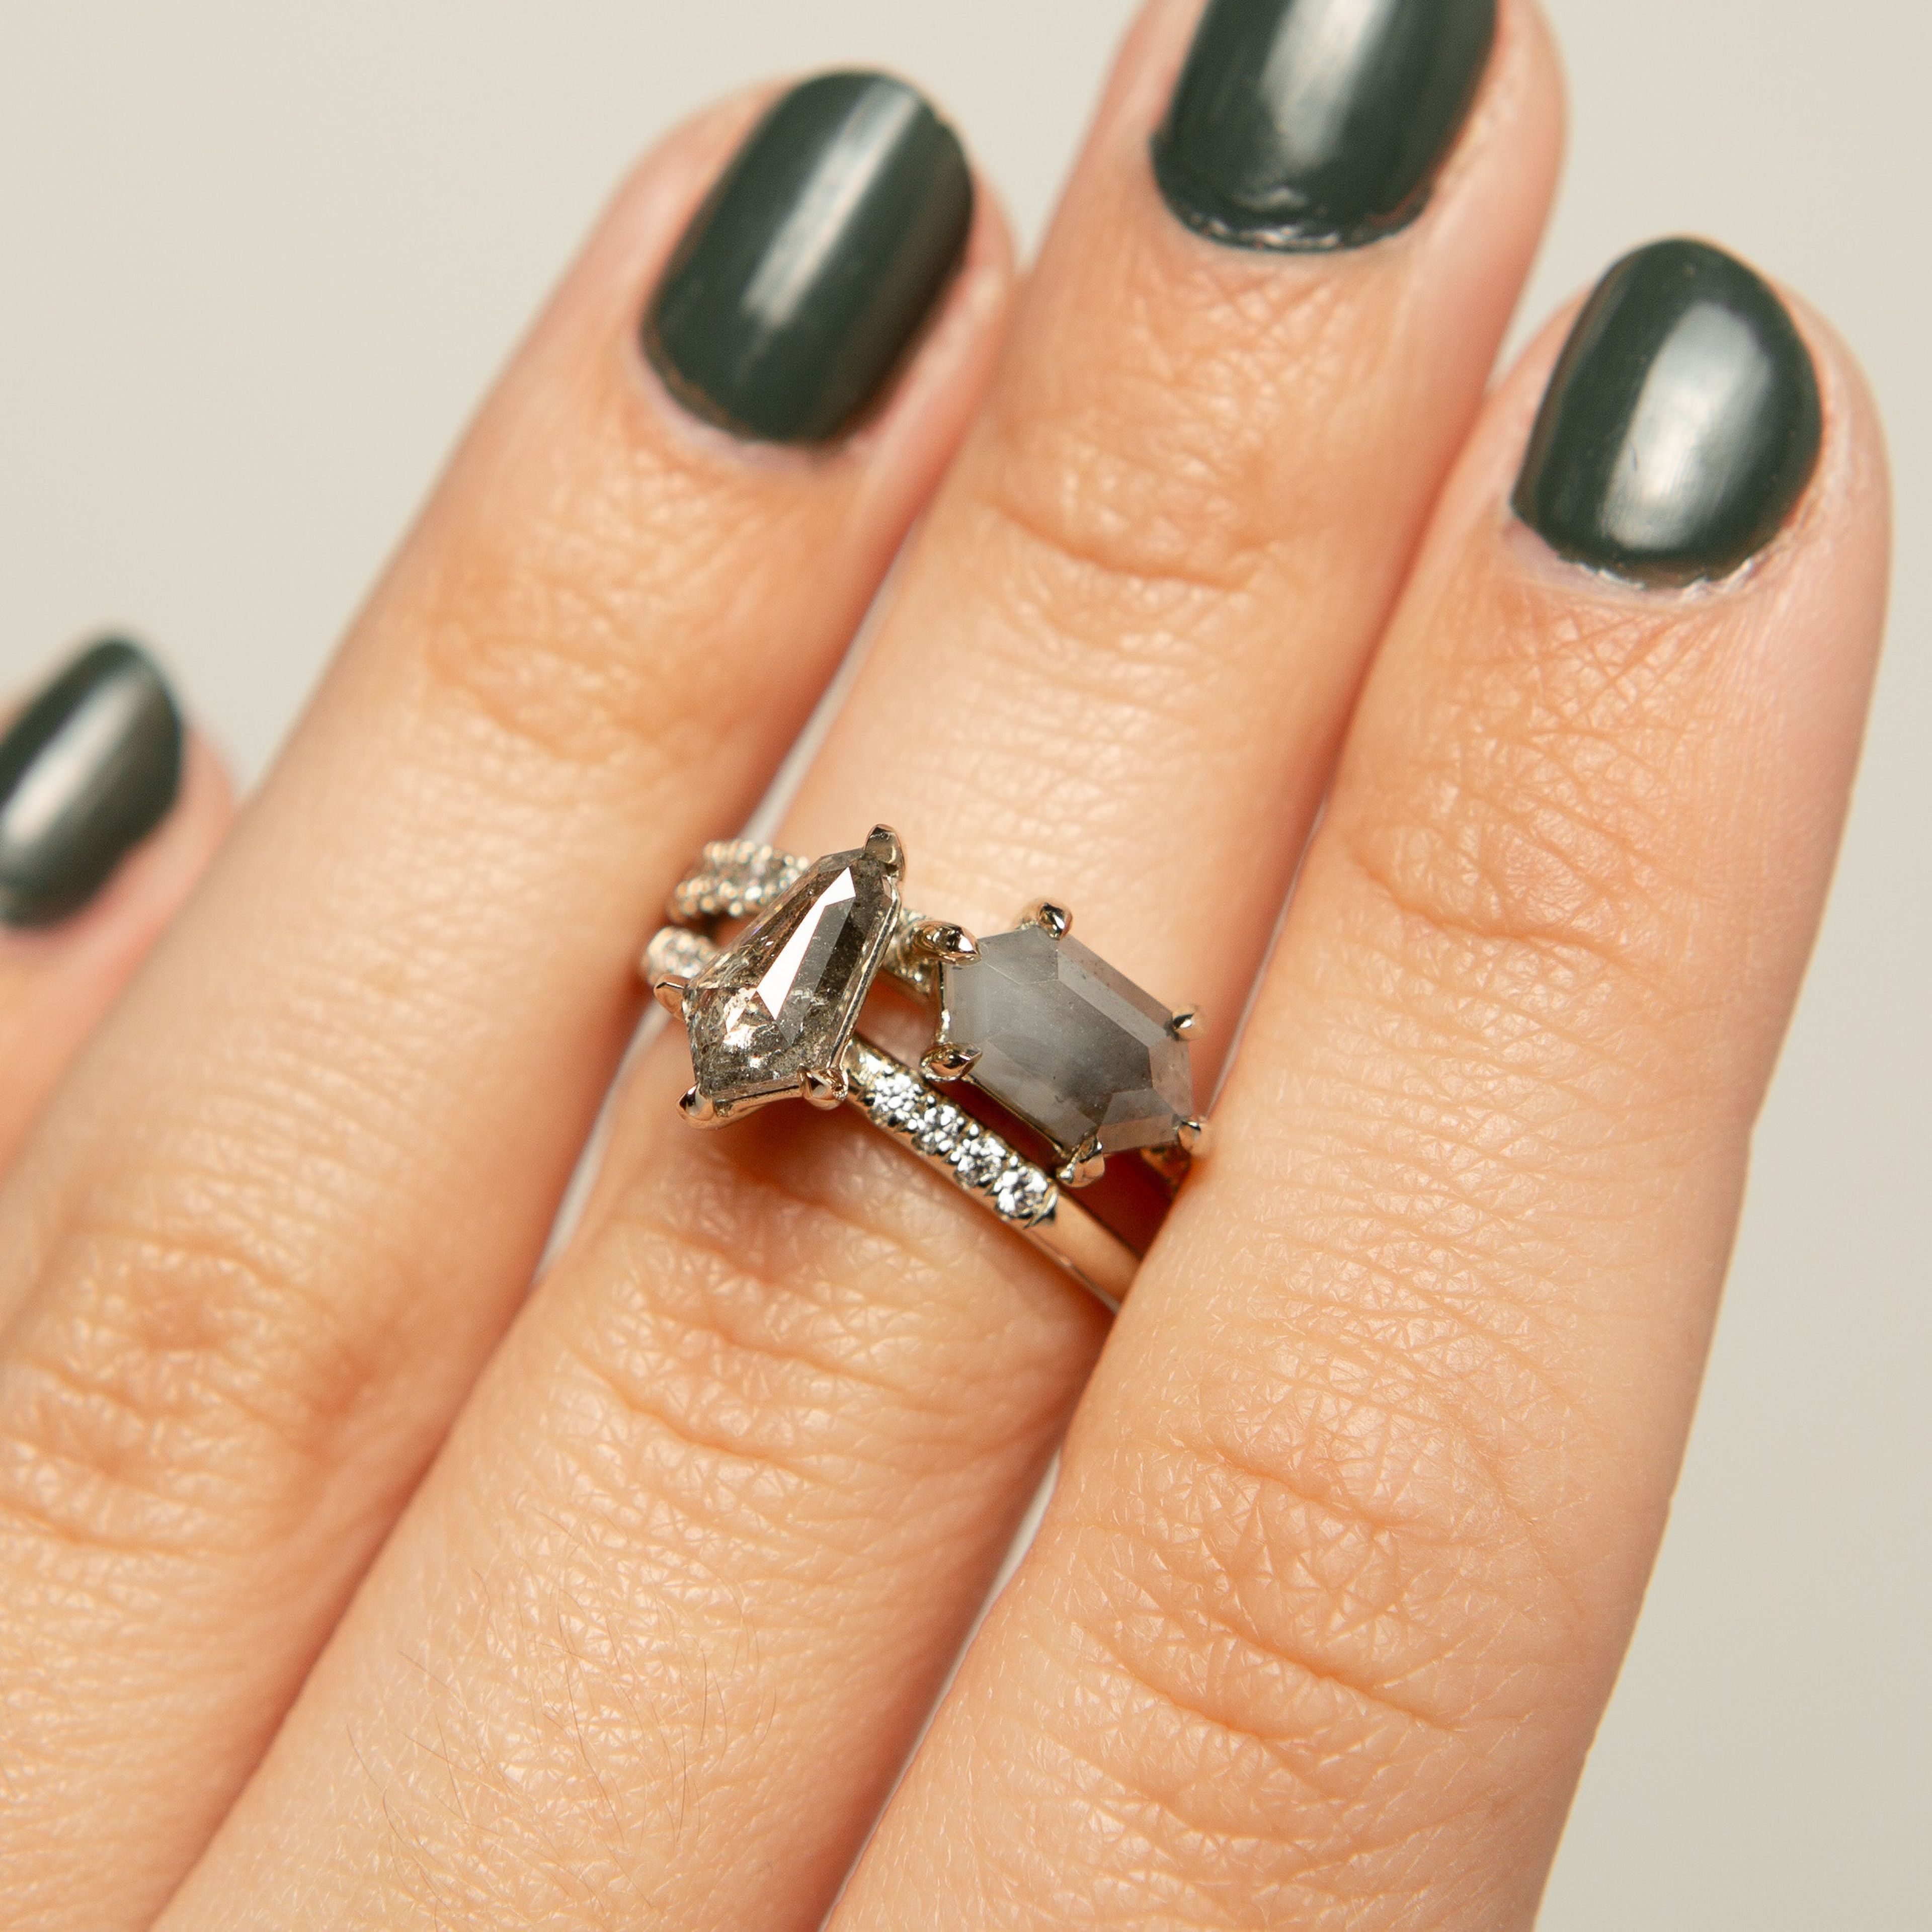 Ombre Grey Diamond Ring in 14k White Gold